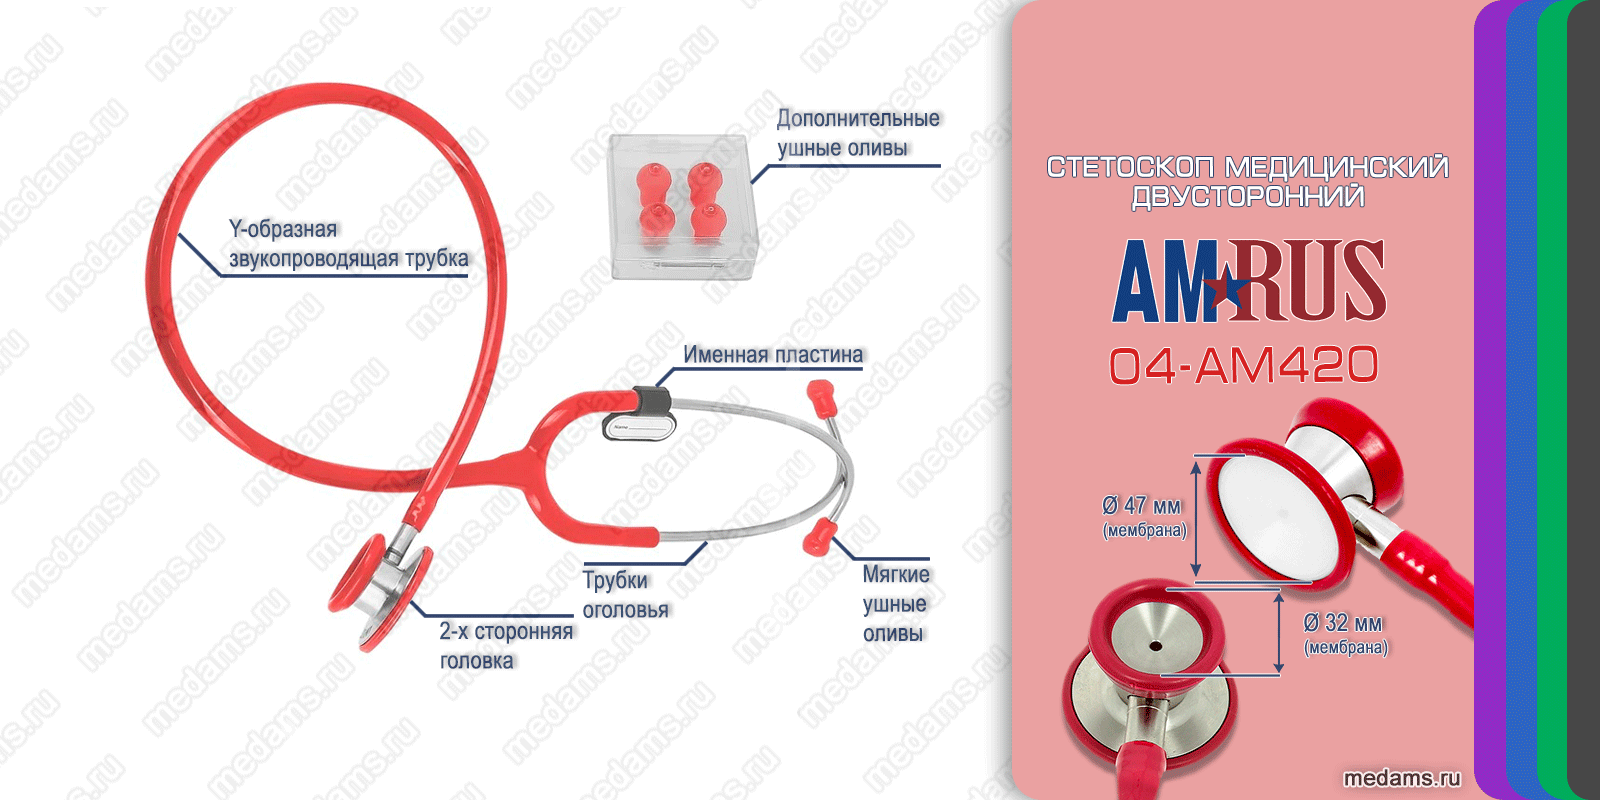 Стетоскоп медицинский двусторонний 04-AM420 Amrus (Амрус) 